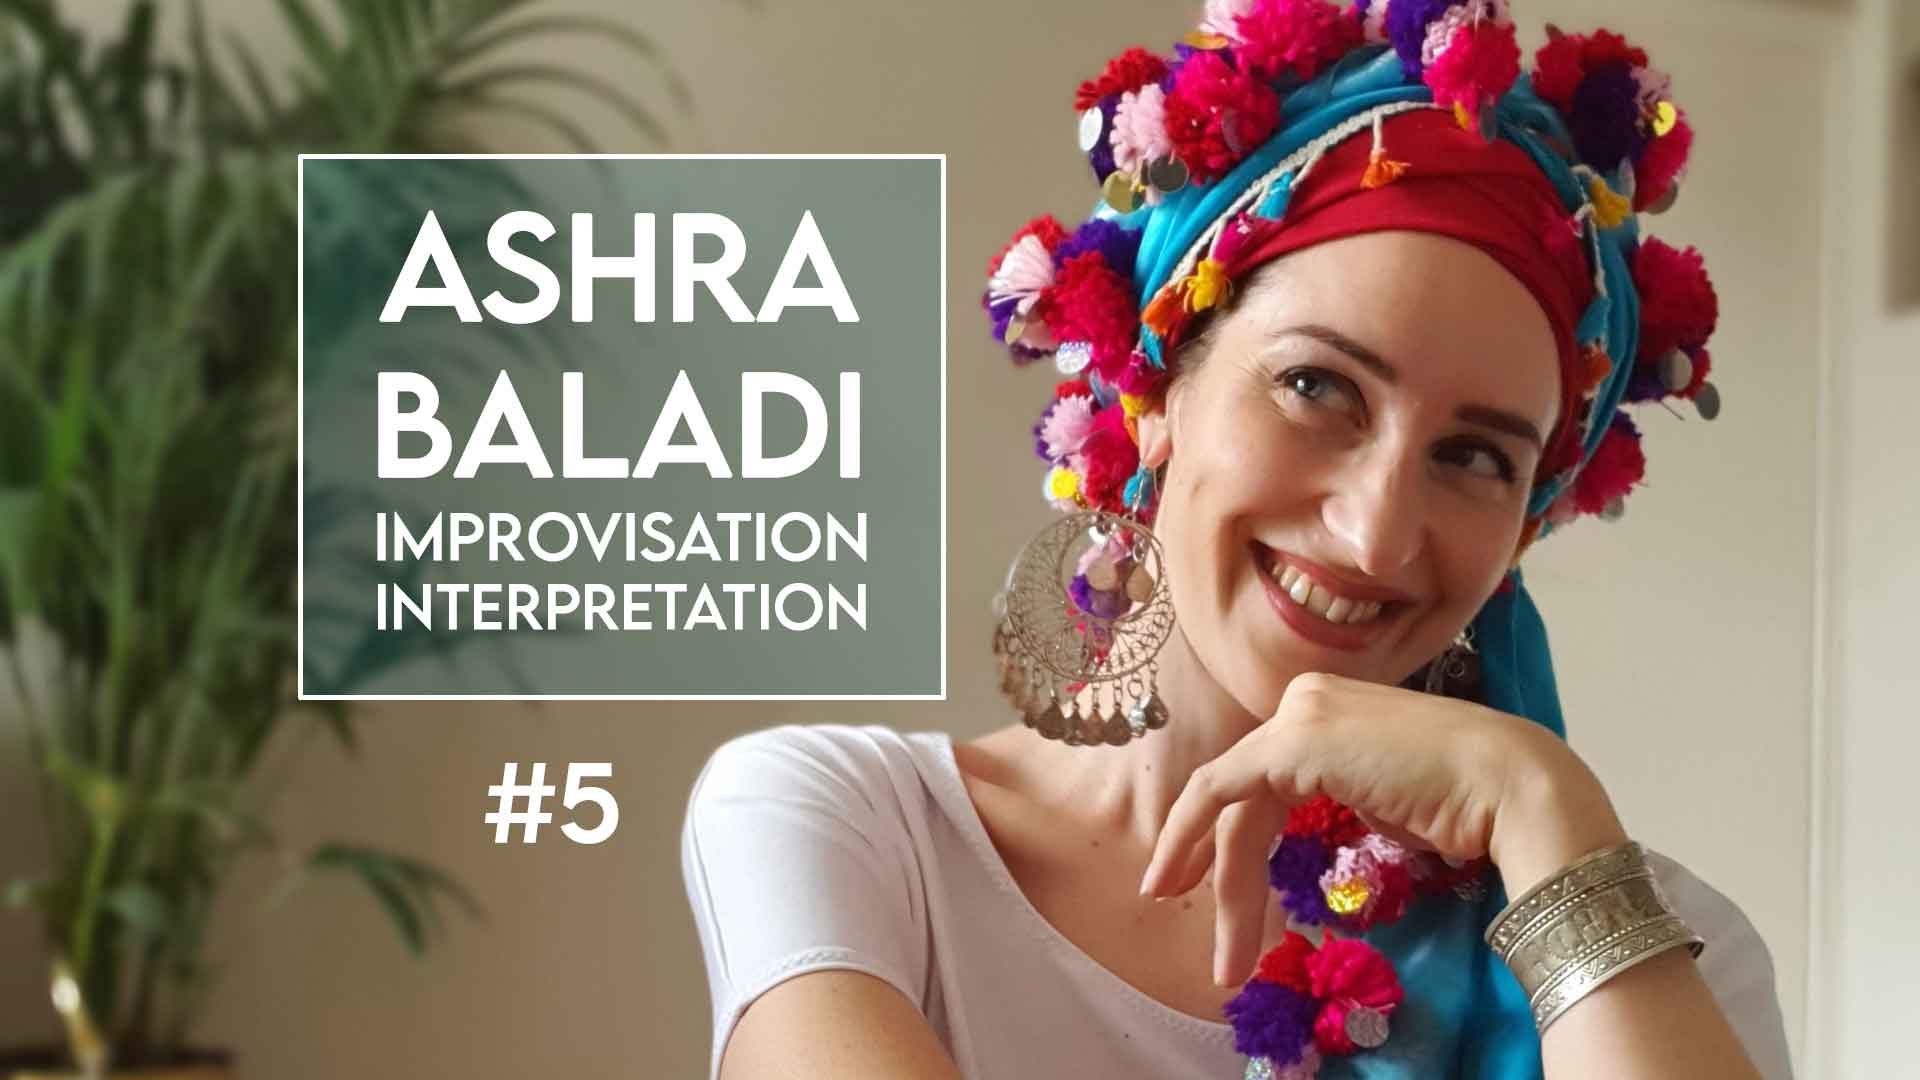 Cours 5 danse orientale en ligne : Ashra baladi